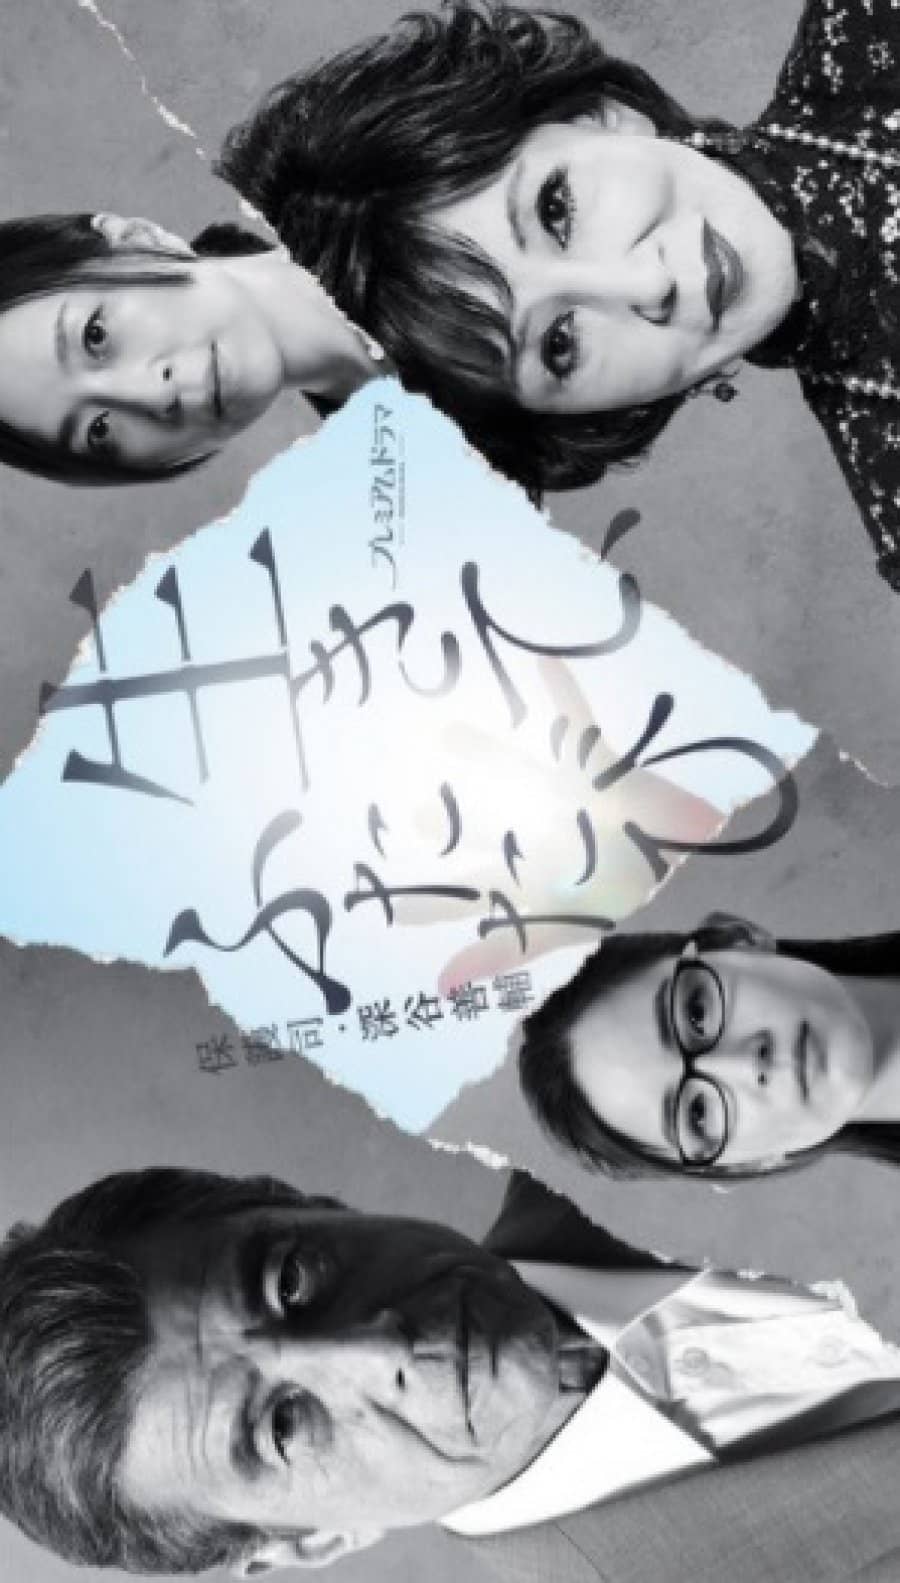 Ikite, Futatabi Hogoshi Fukaya Zensuke - Sinopsis, Pemain, OST, Episode, Review